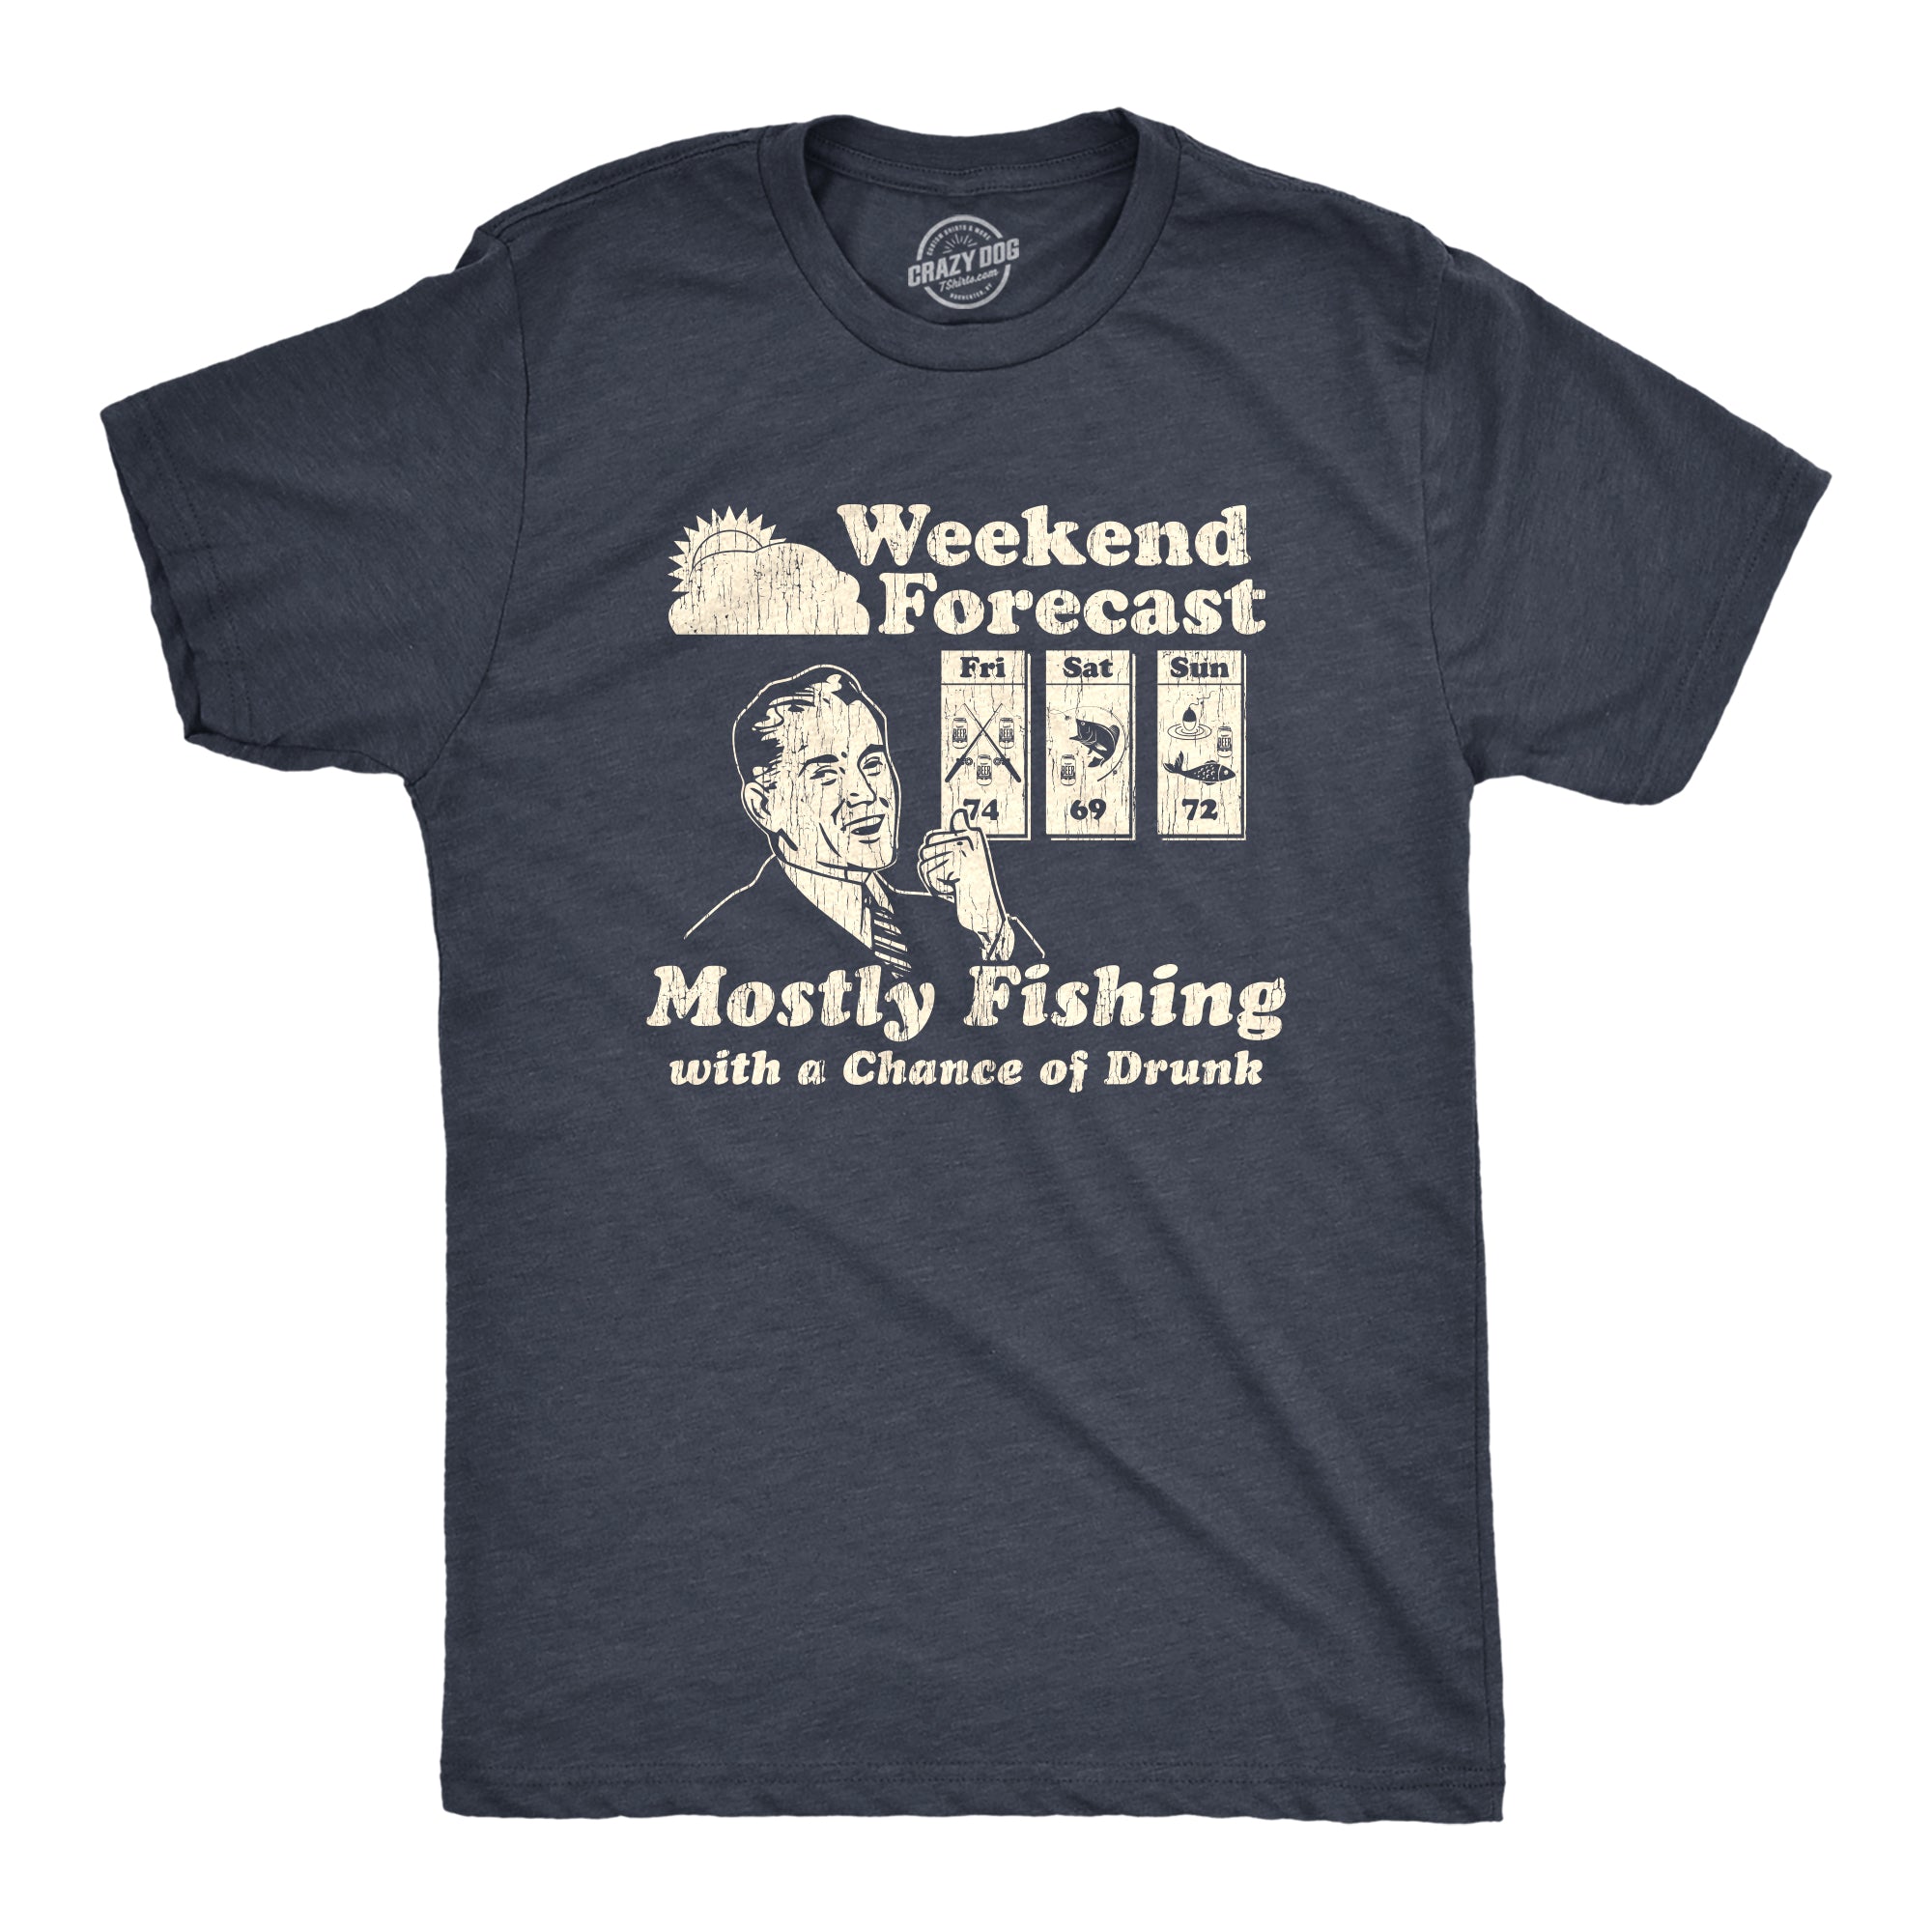 Mens The Fish Whisperer Tshirt Funny Fishing Lake Time Graphic